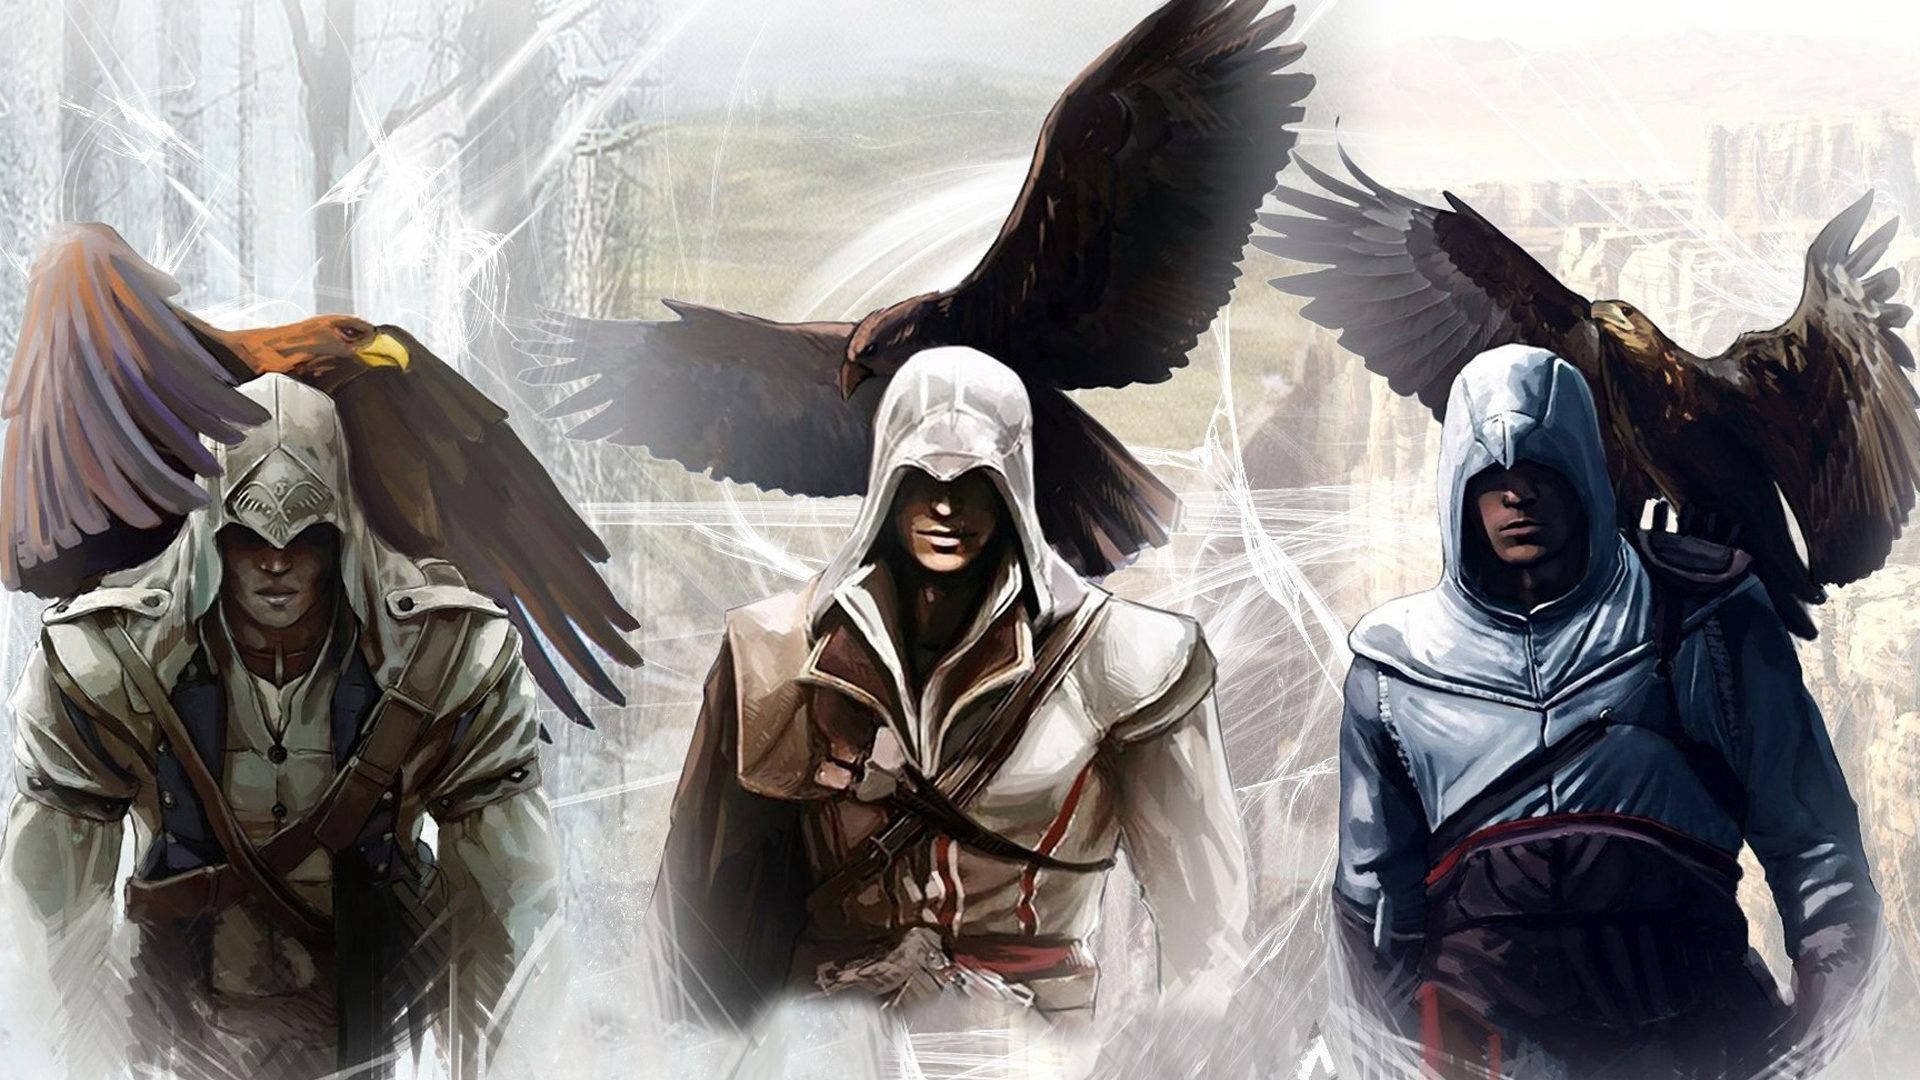 assassins, Creed, Brotherhood, Action, Adventure, Fantasy, Fighting, Warrior, Stealth Wallpaper